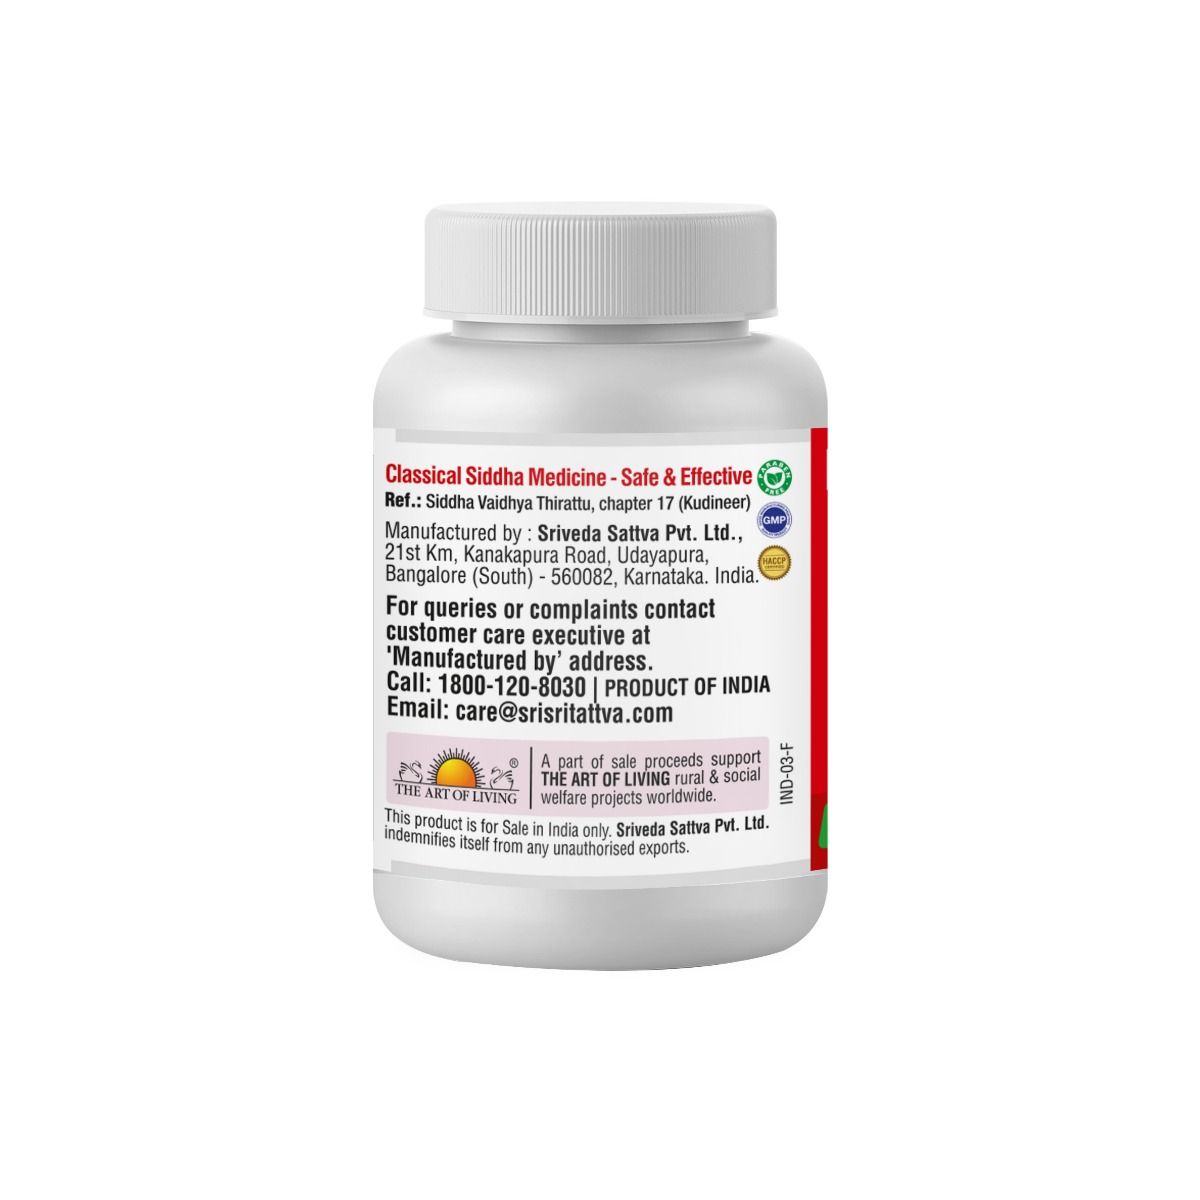 Sri Sri Tattva Kabasura Kudineer 500 mg, 60 Tablets, Pack of 1 